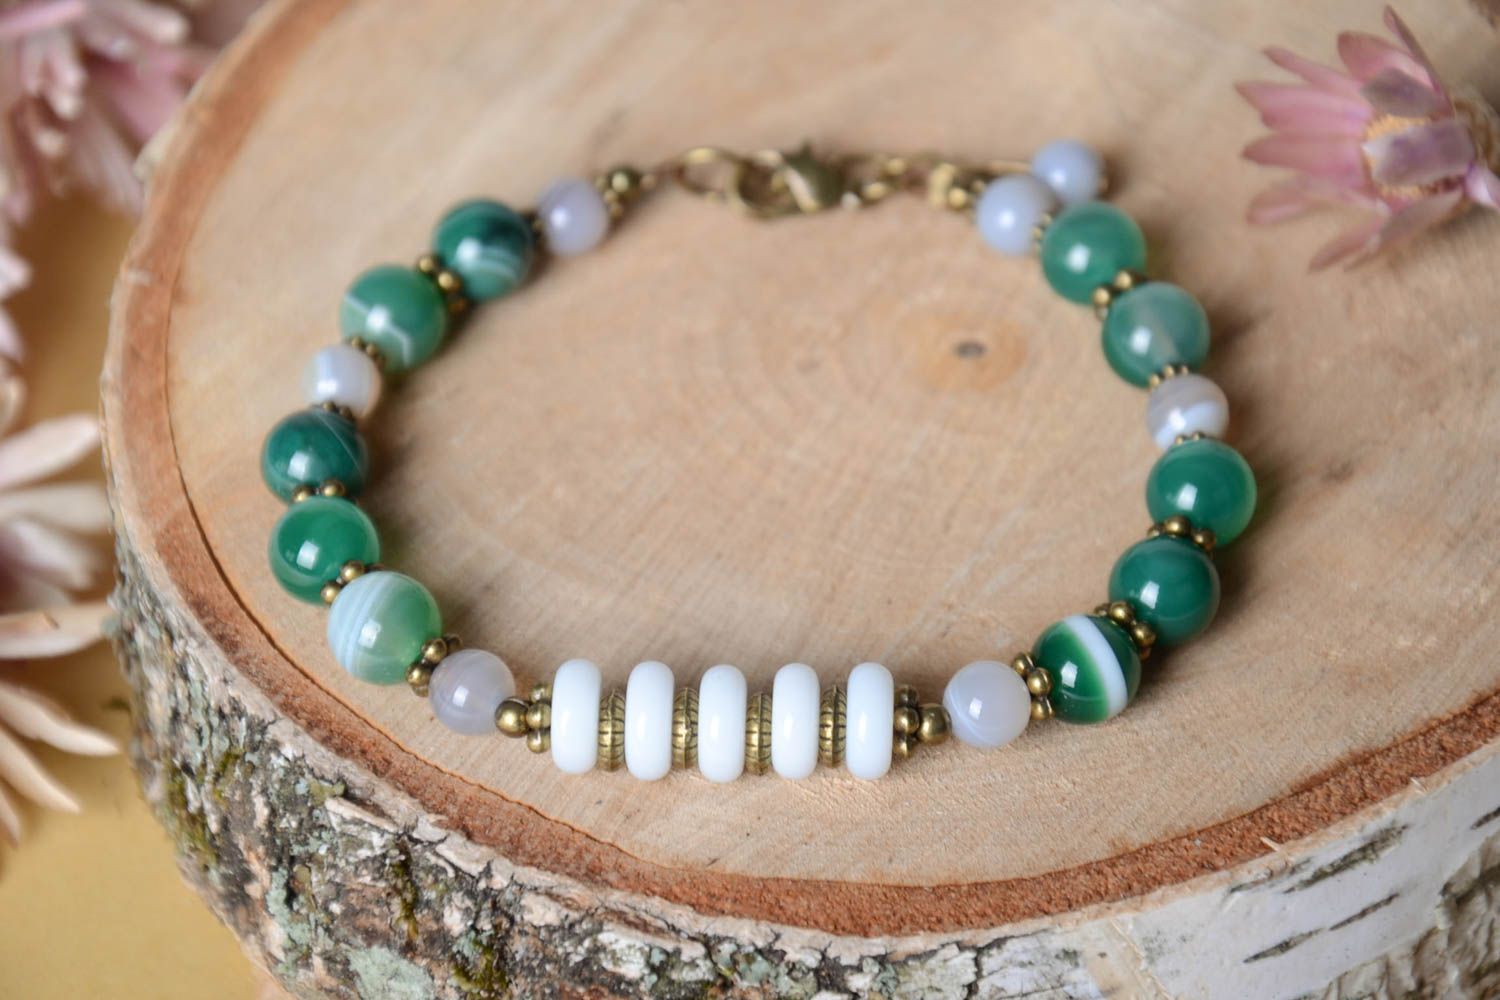 Beautiful handmade stone bracelet artisan jewelry designs gifts for her photo 1